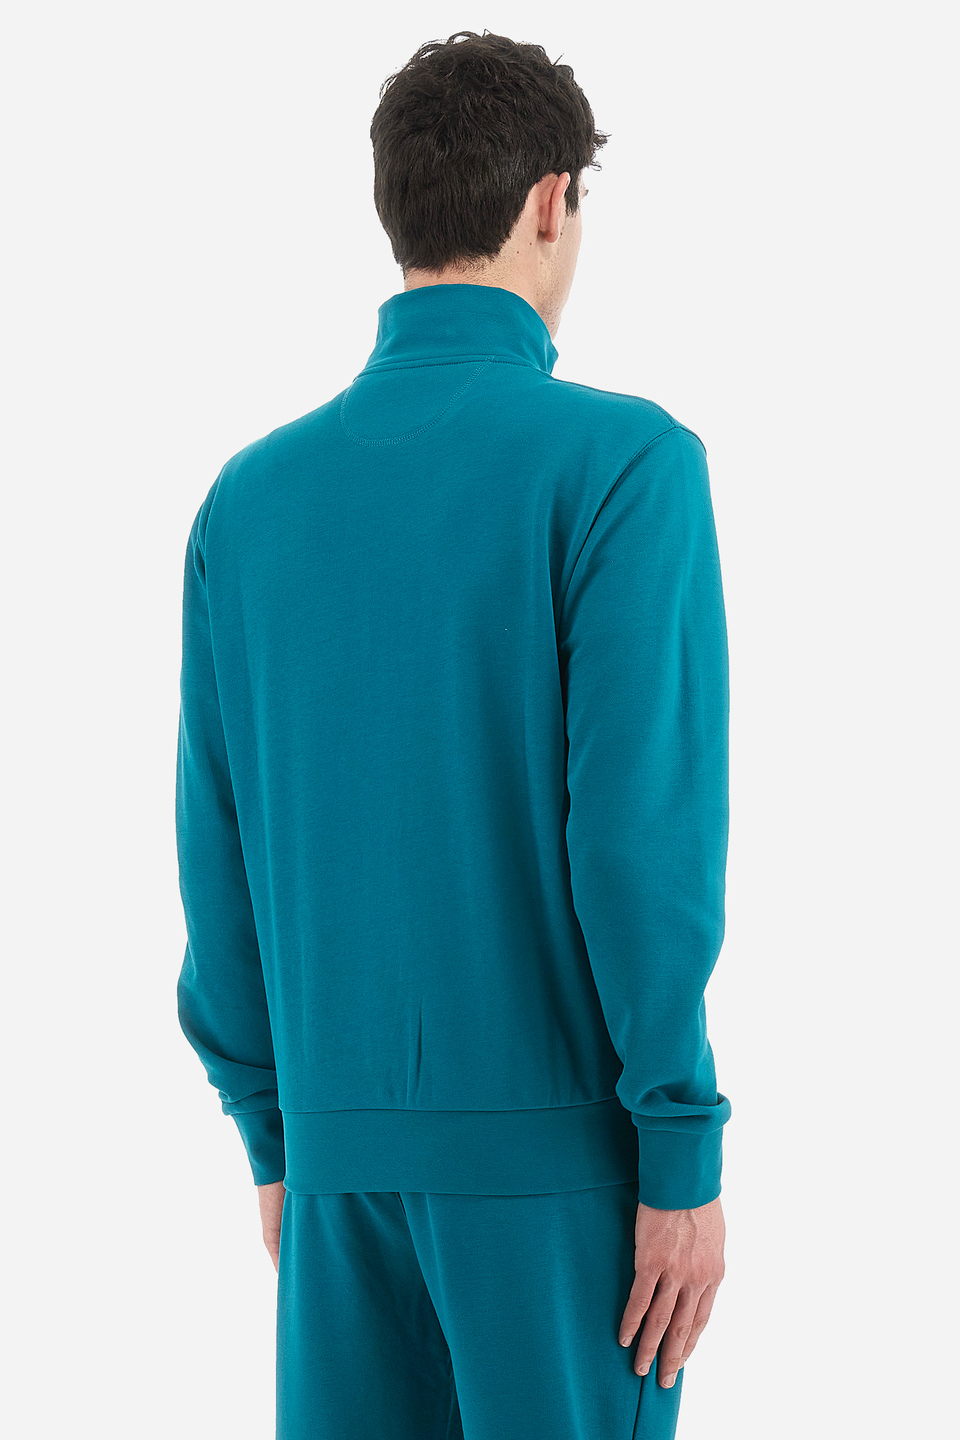 Langarm-Sweatshirt mit Reißverschluss für Herren in normaler Passform - Quilt | La Martina - Official Online Shop